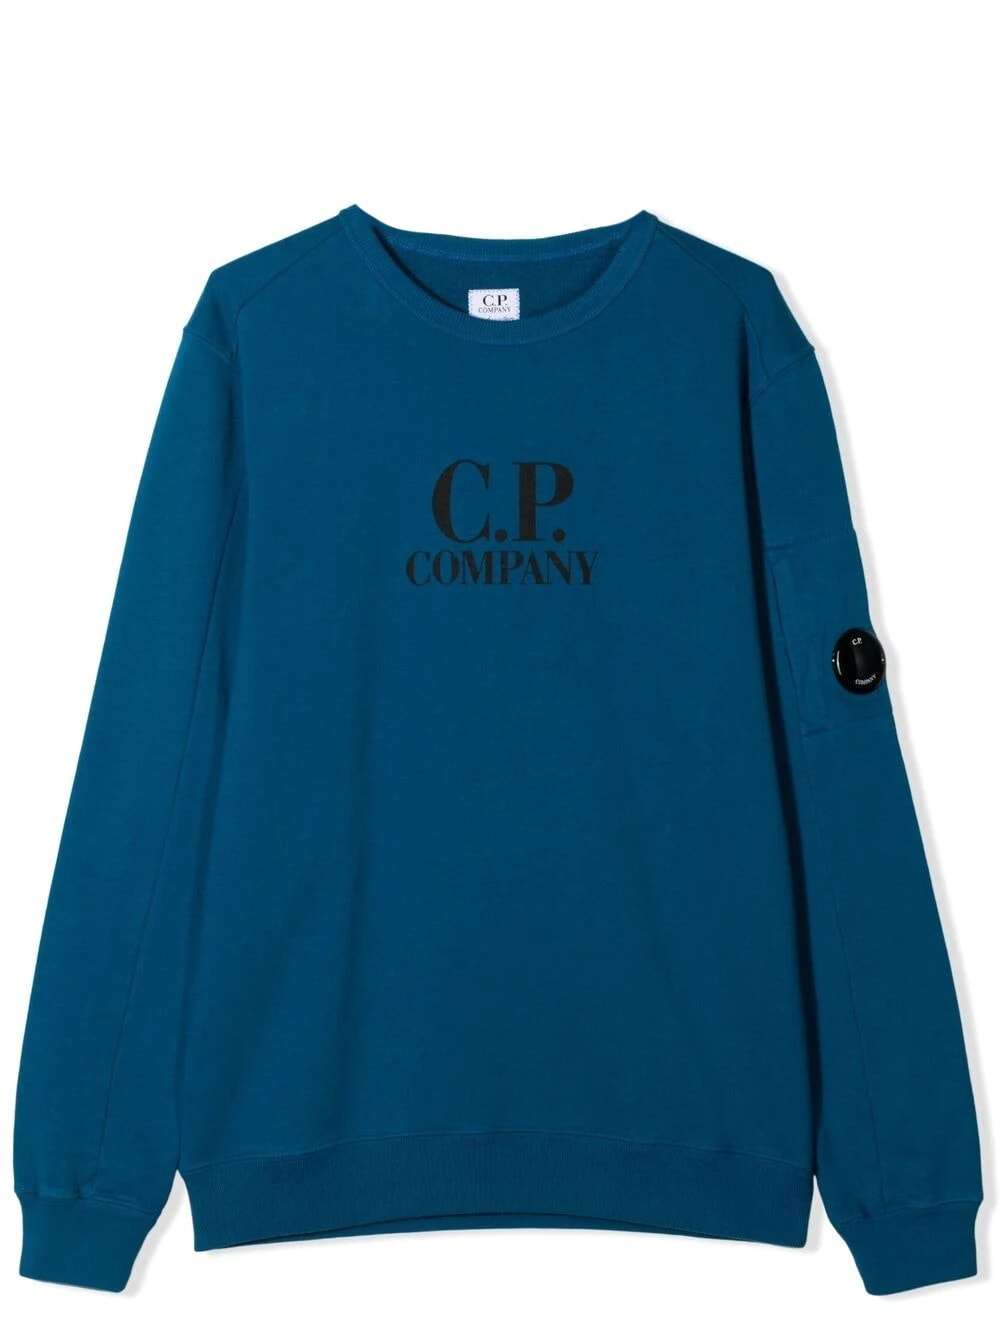 C.P. Company Undersixteen Sweatshirt With Print